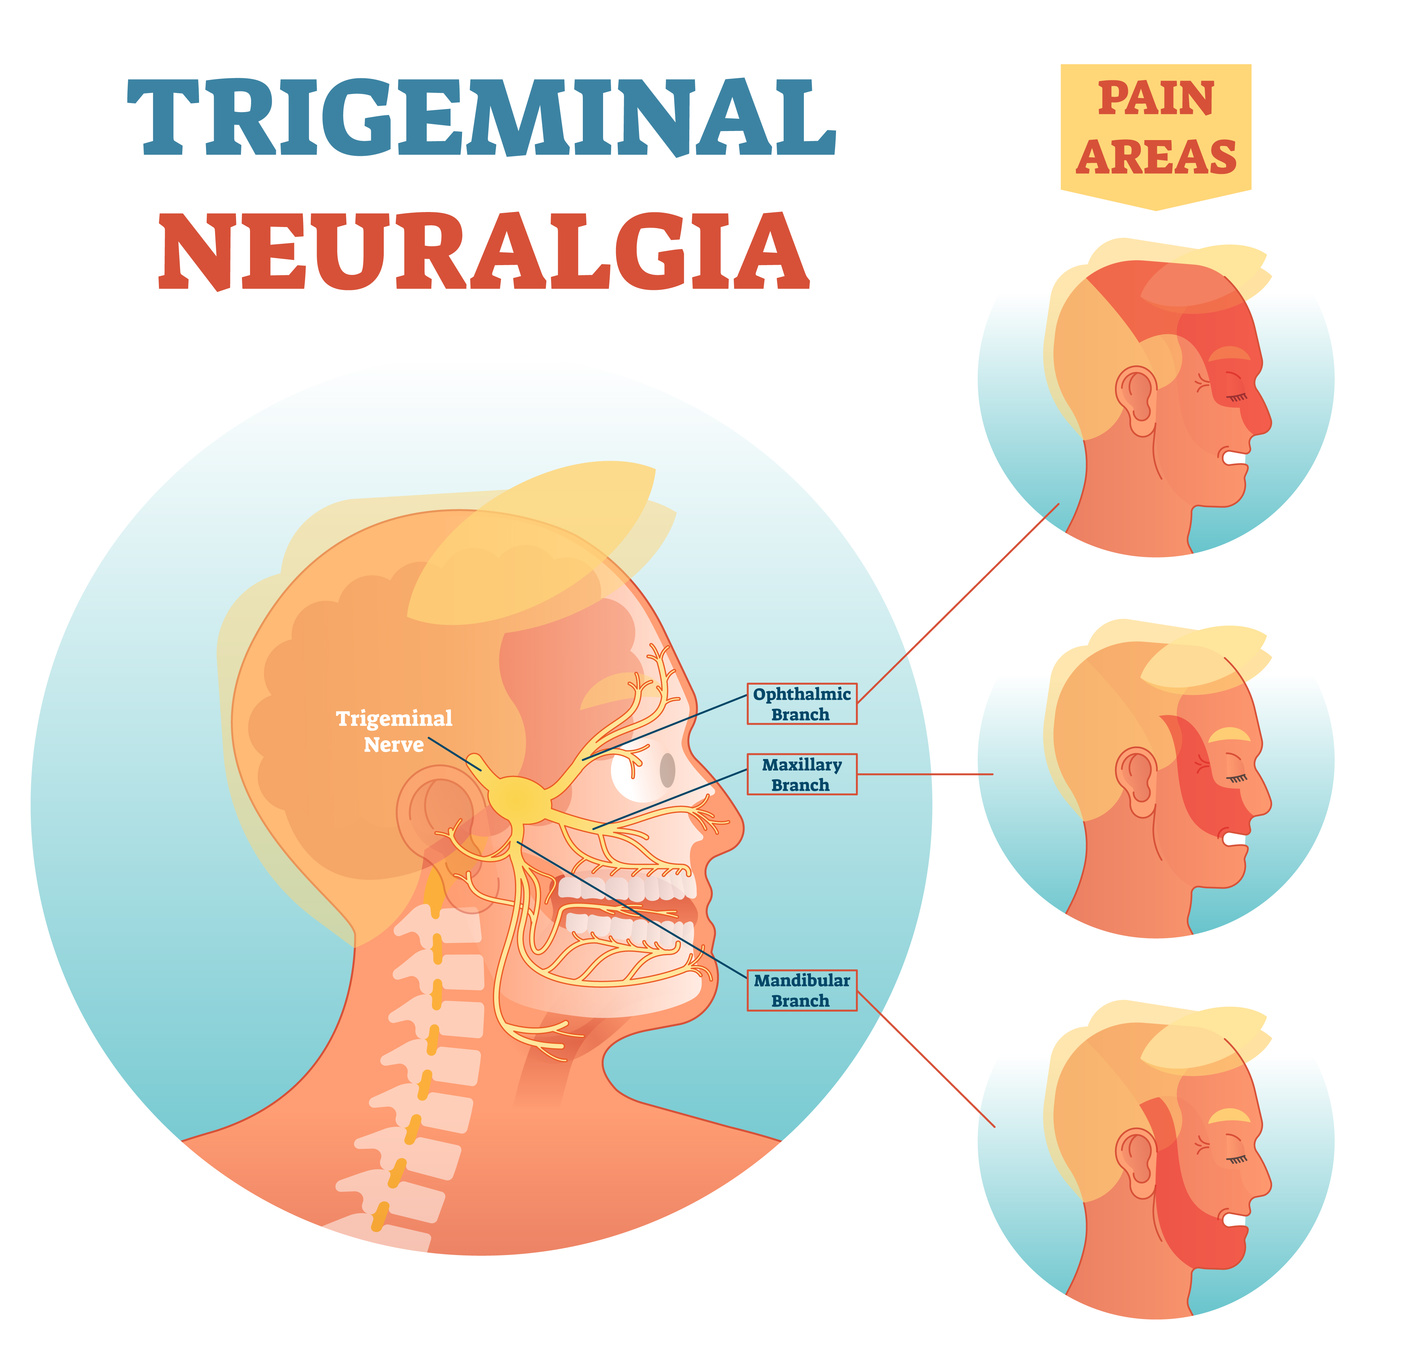 U1253 - Therapeutic failure in trigeminal neuralgia